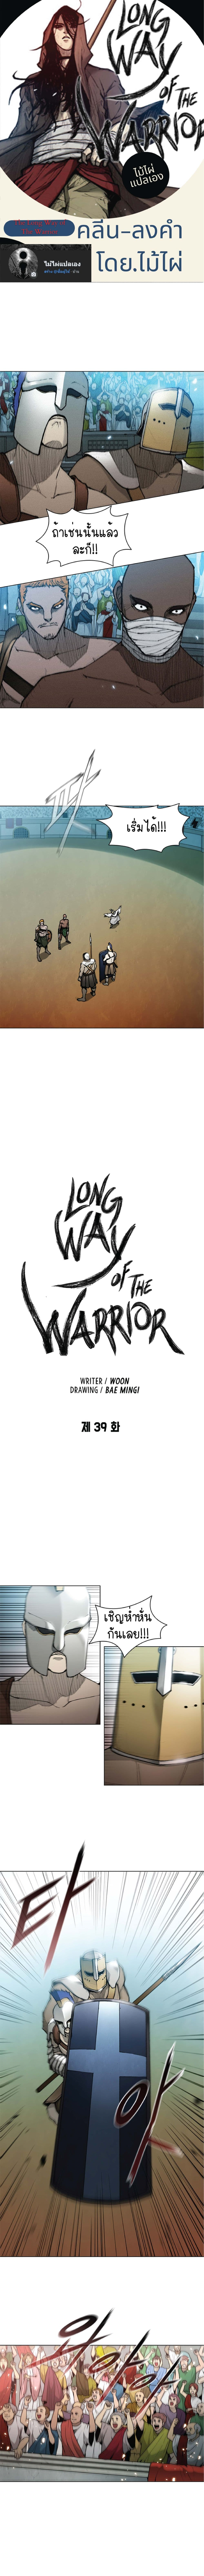 The Long Way of the Warrior à¸•à¸­à¸™à¸—à¸µà¹ˆ 39 (1)